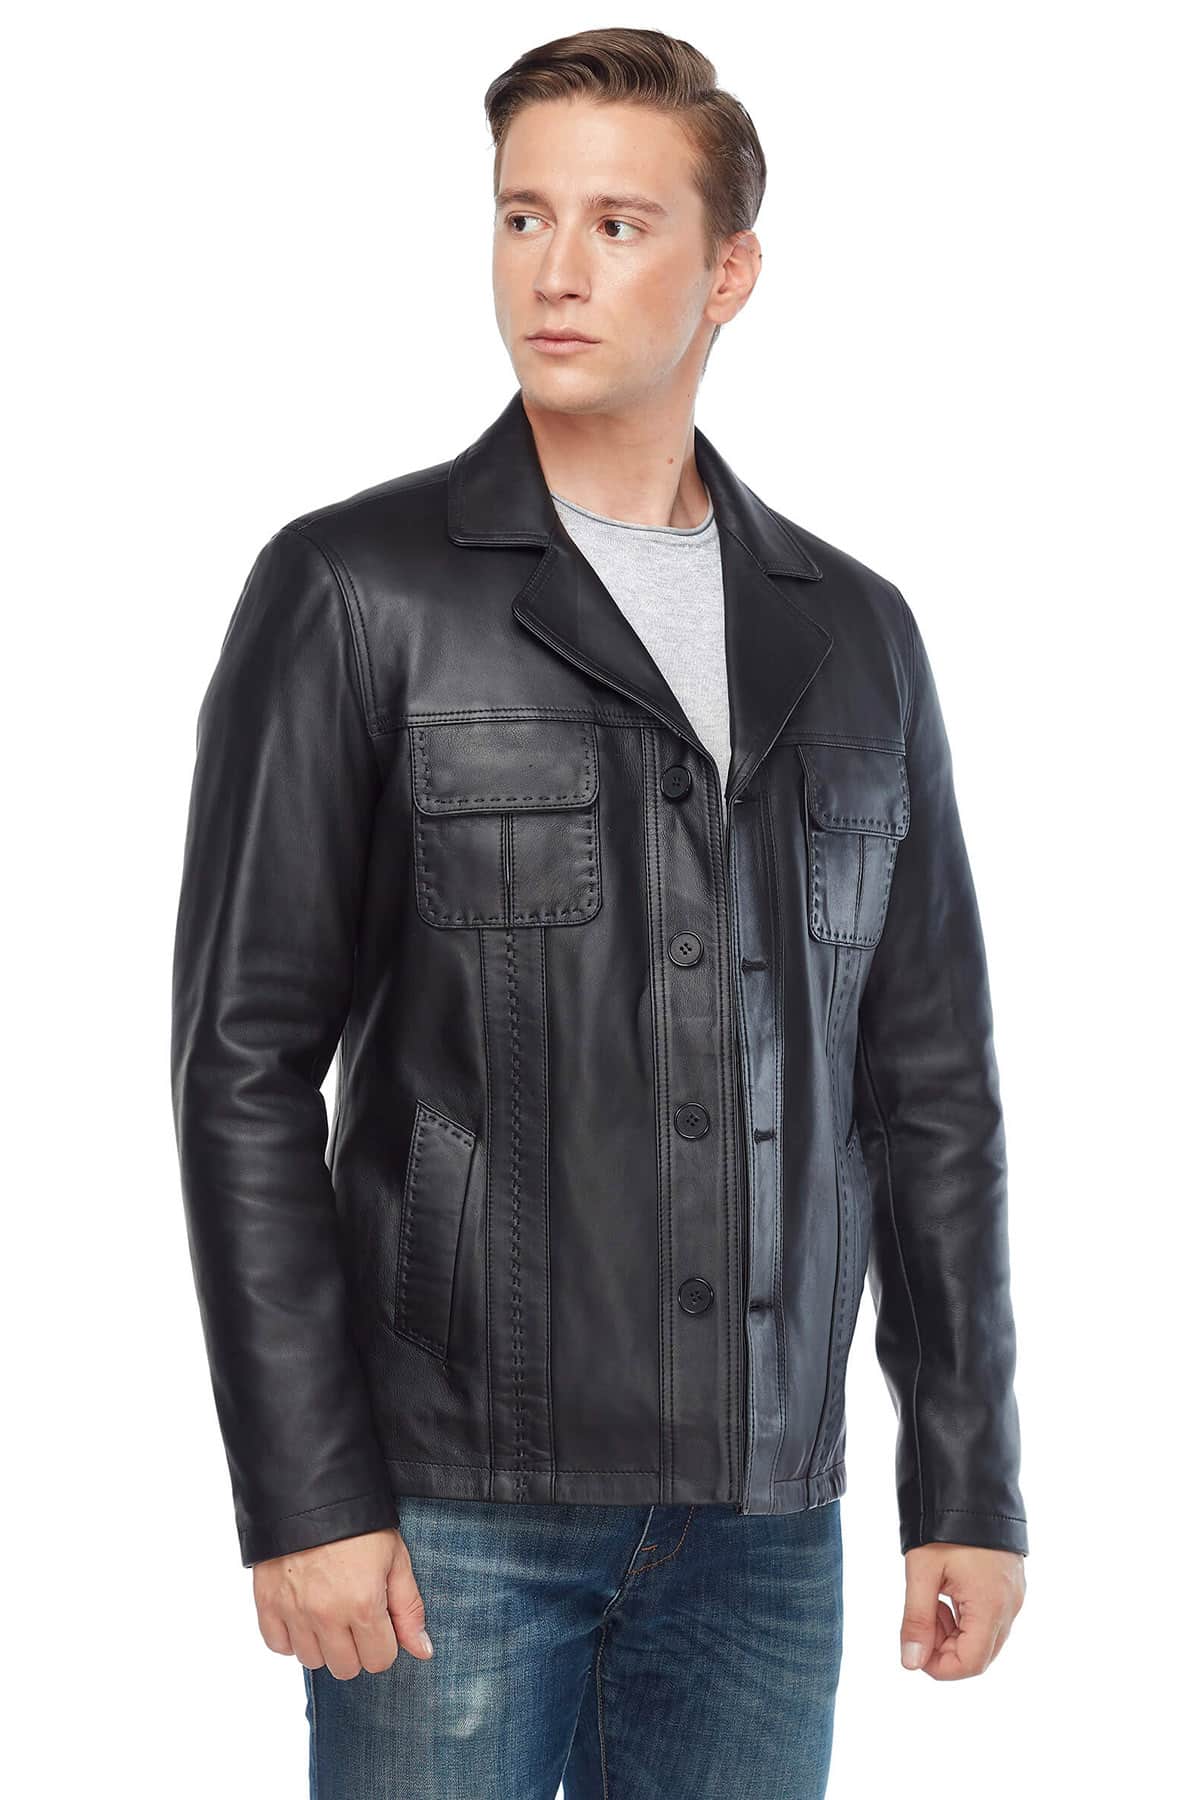 Charley Speed Men’s Leather Coat Black3